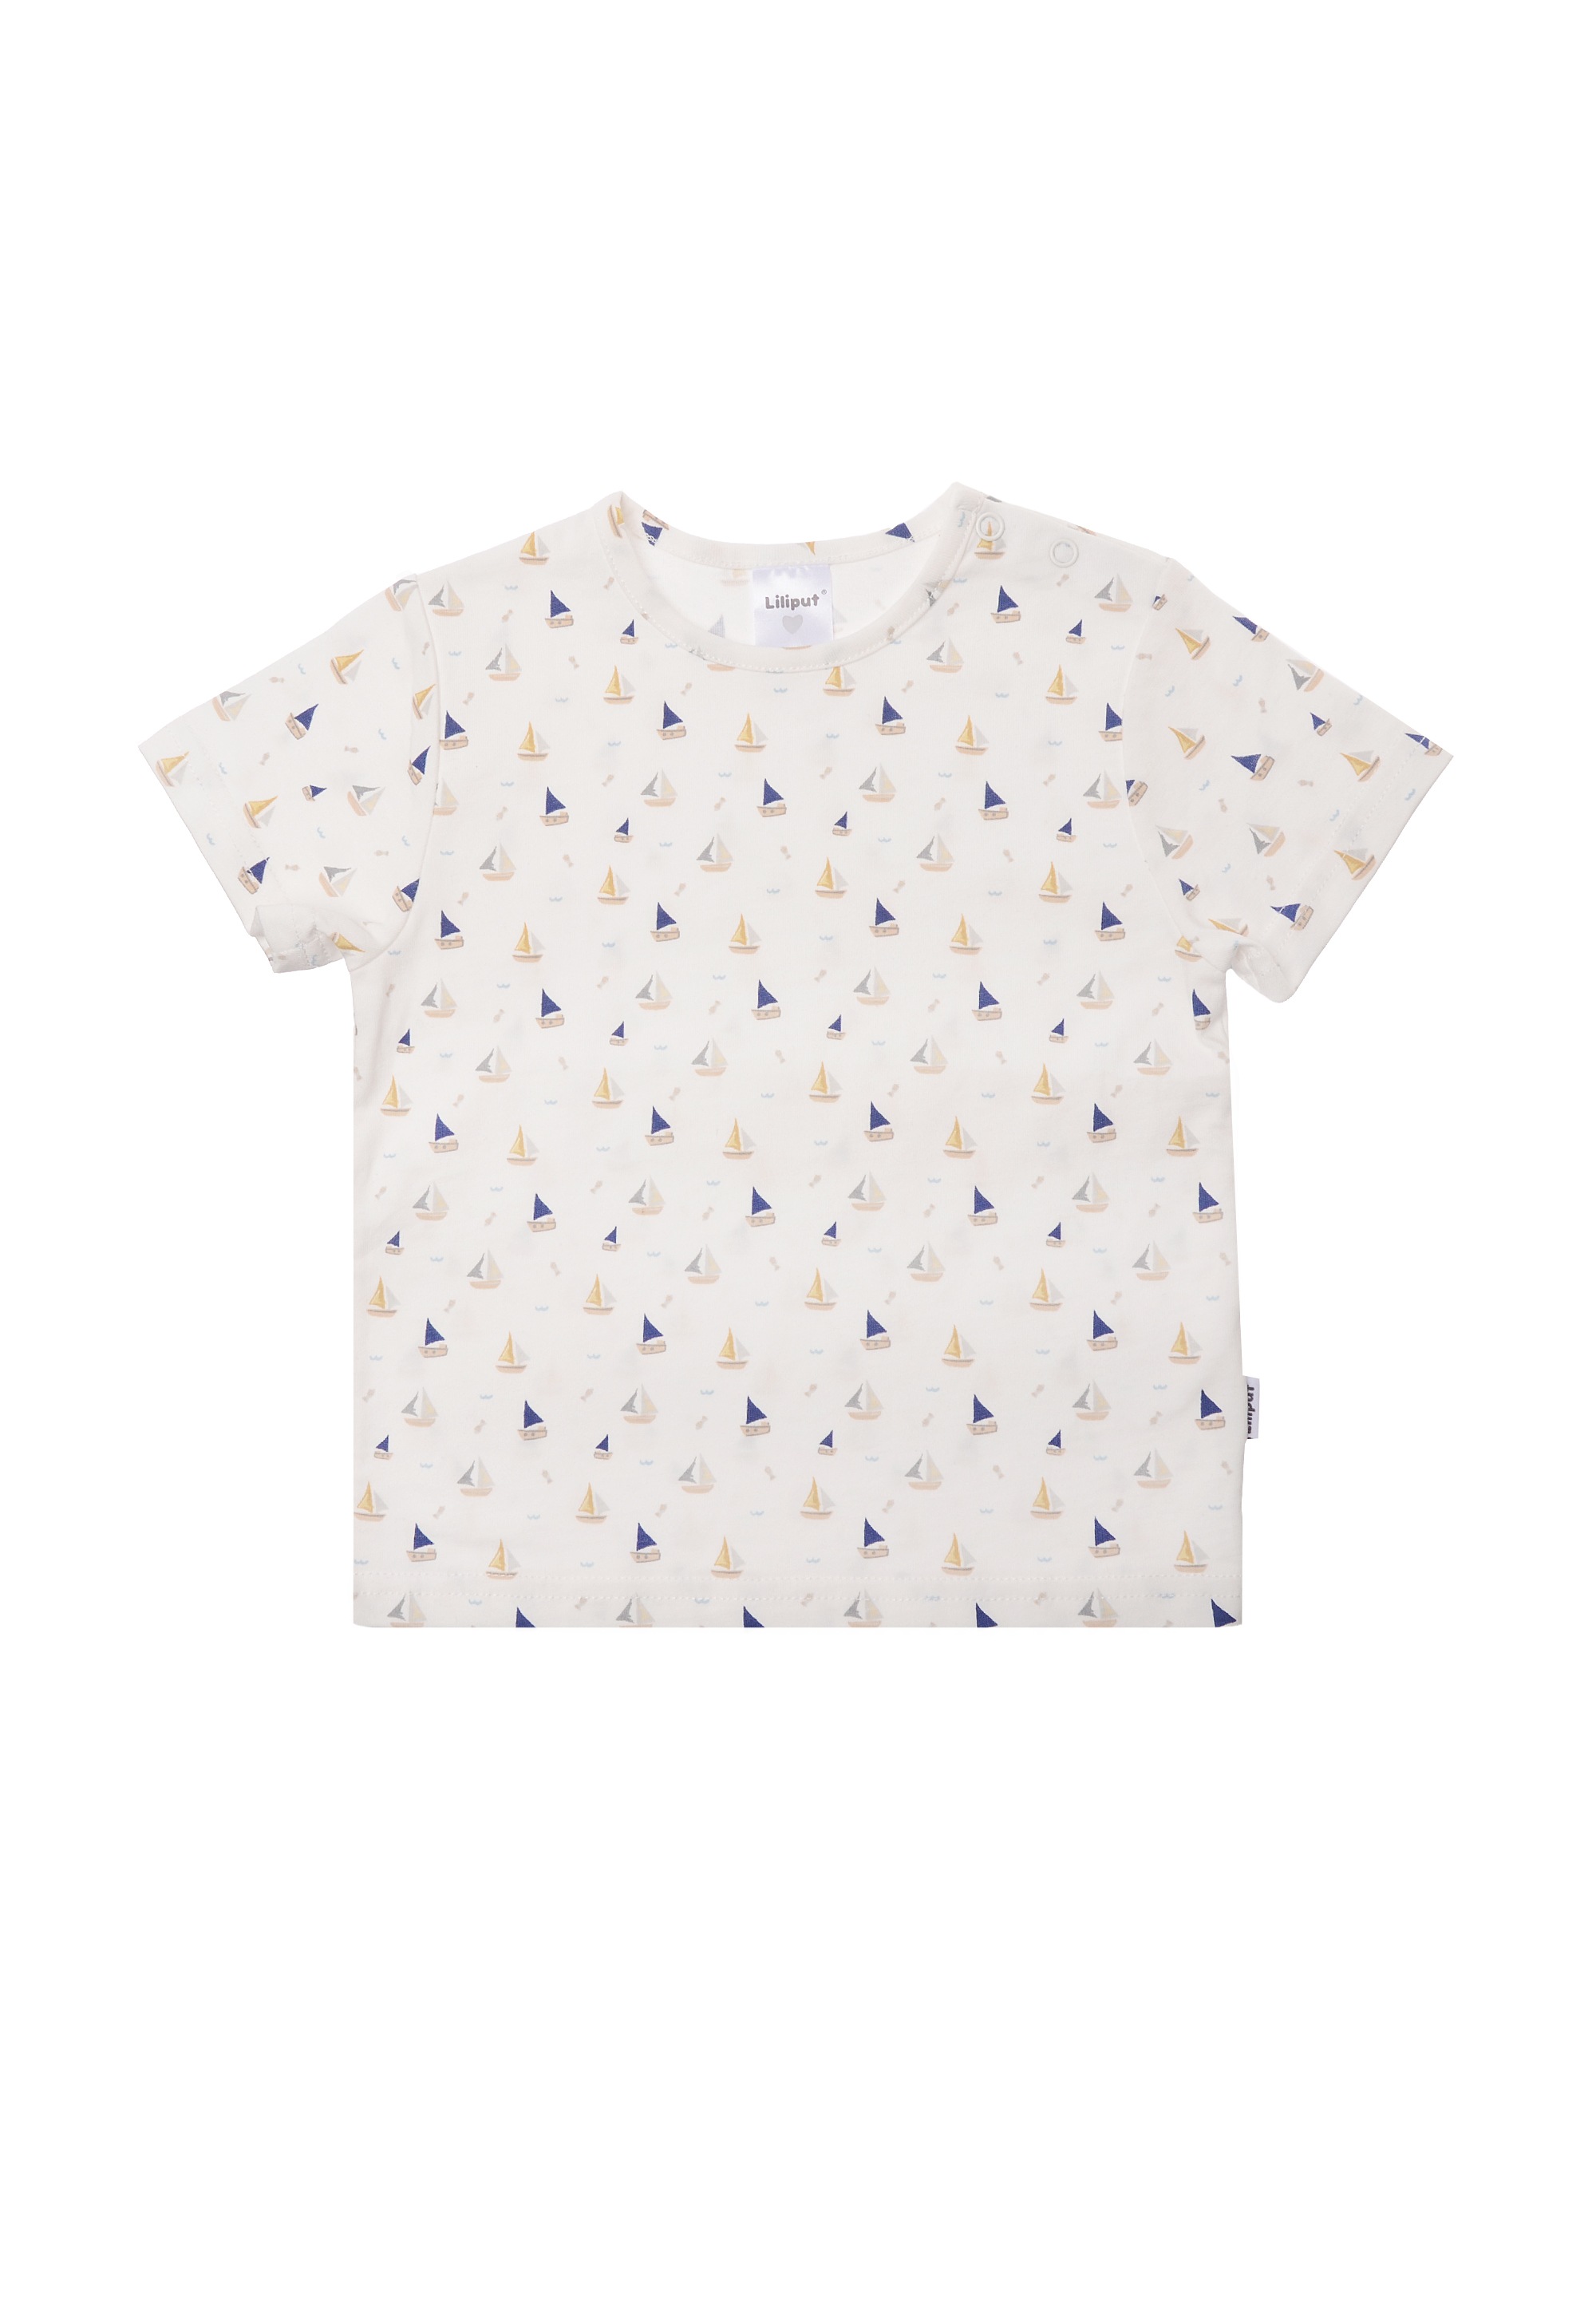 Liliput T-Shirt, weiches Produkt